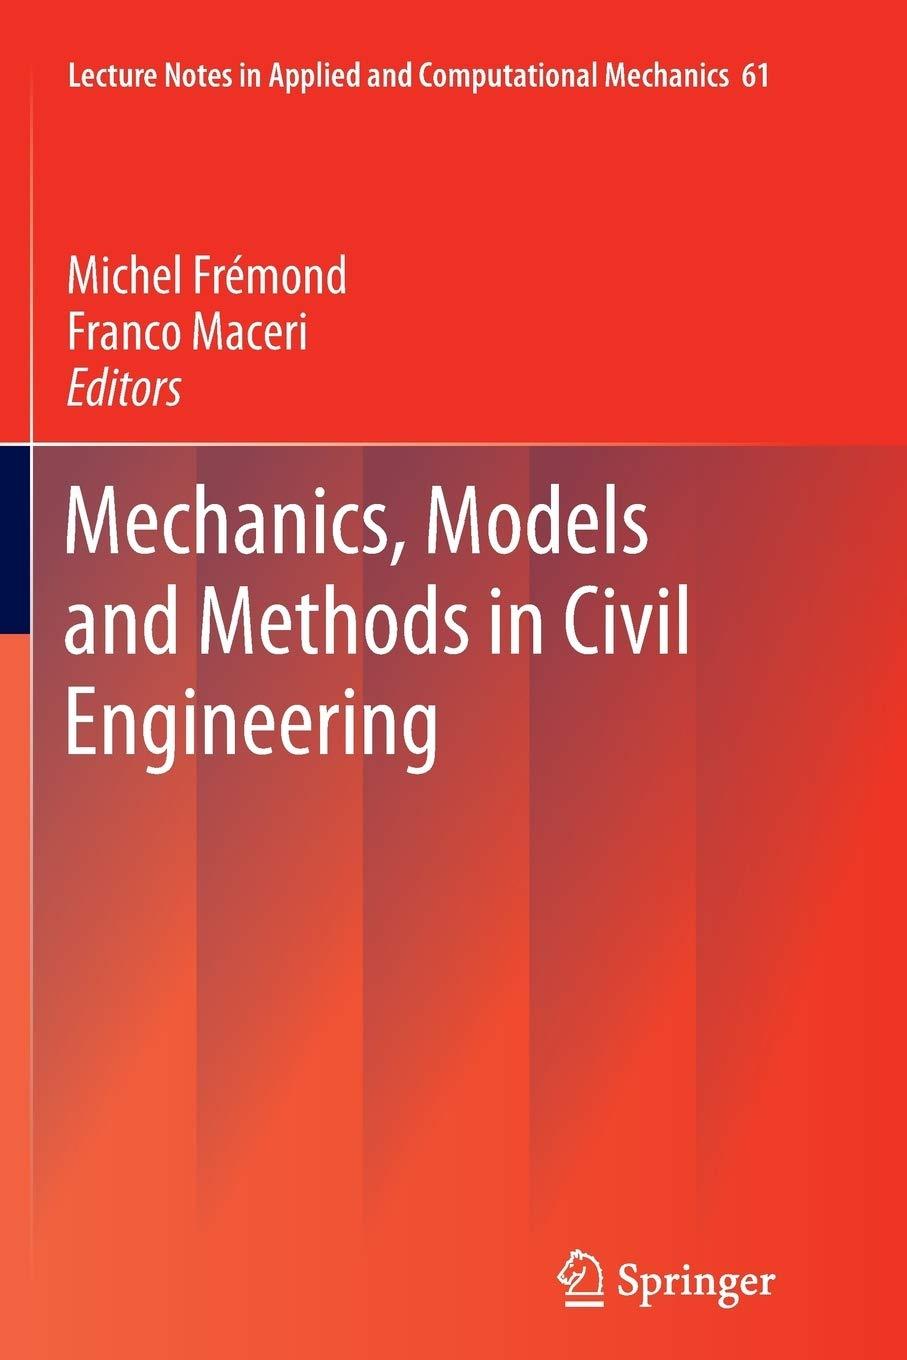 mechanics models and methods in civil engineering 1st edition michel fremond, franco maceri 3642432174,